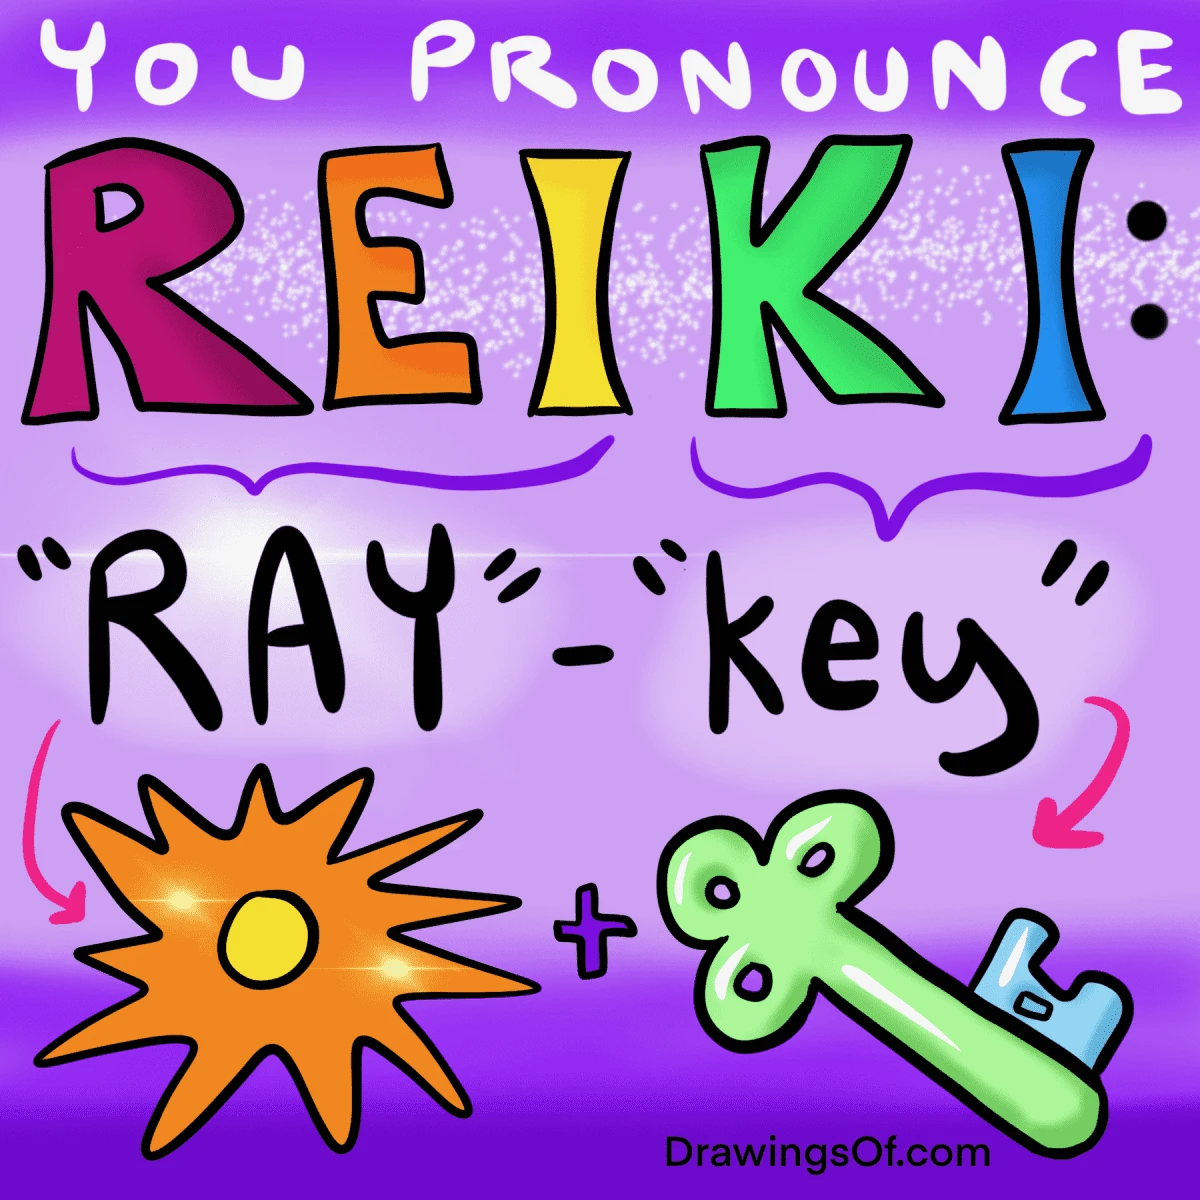 Reiki pronunciation